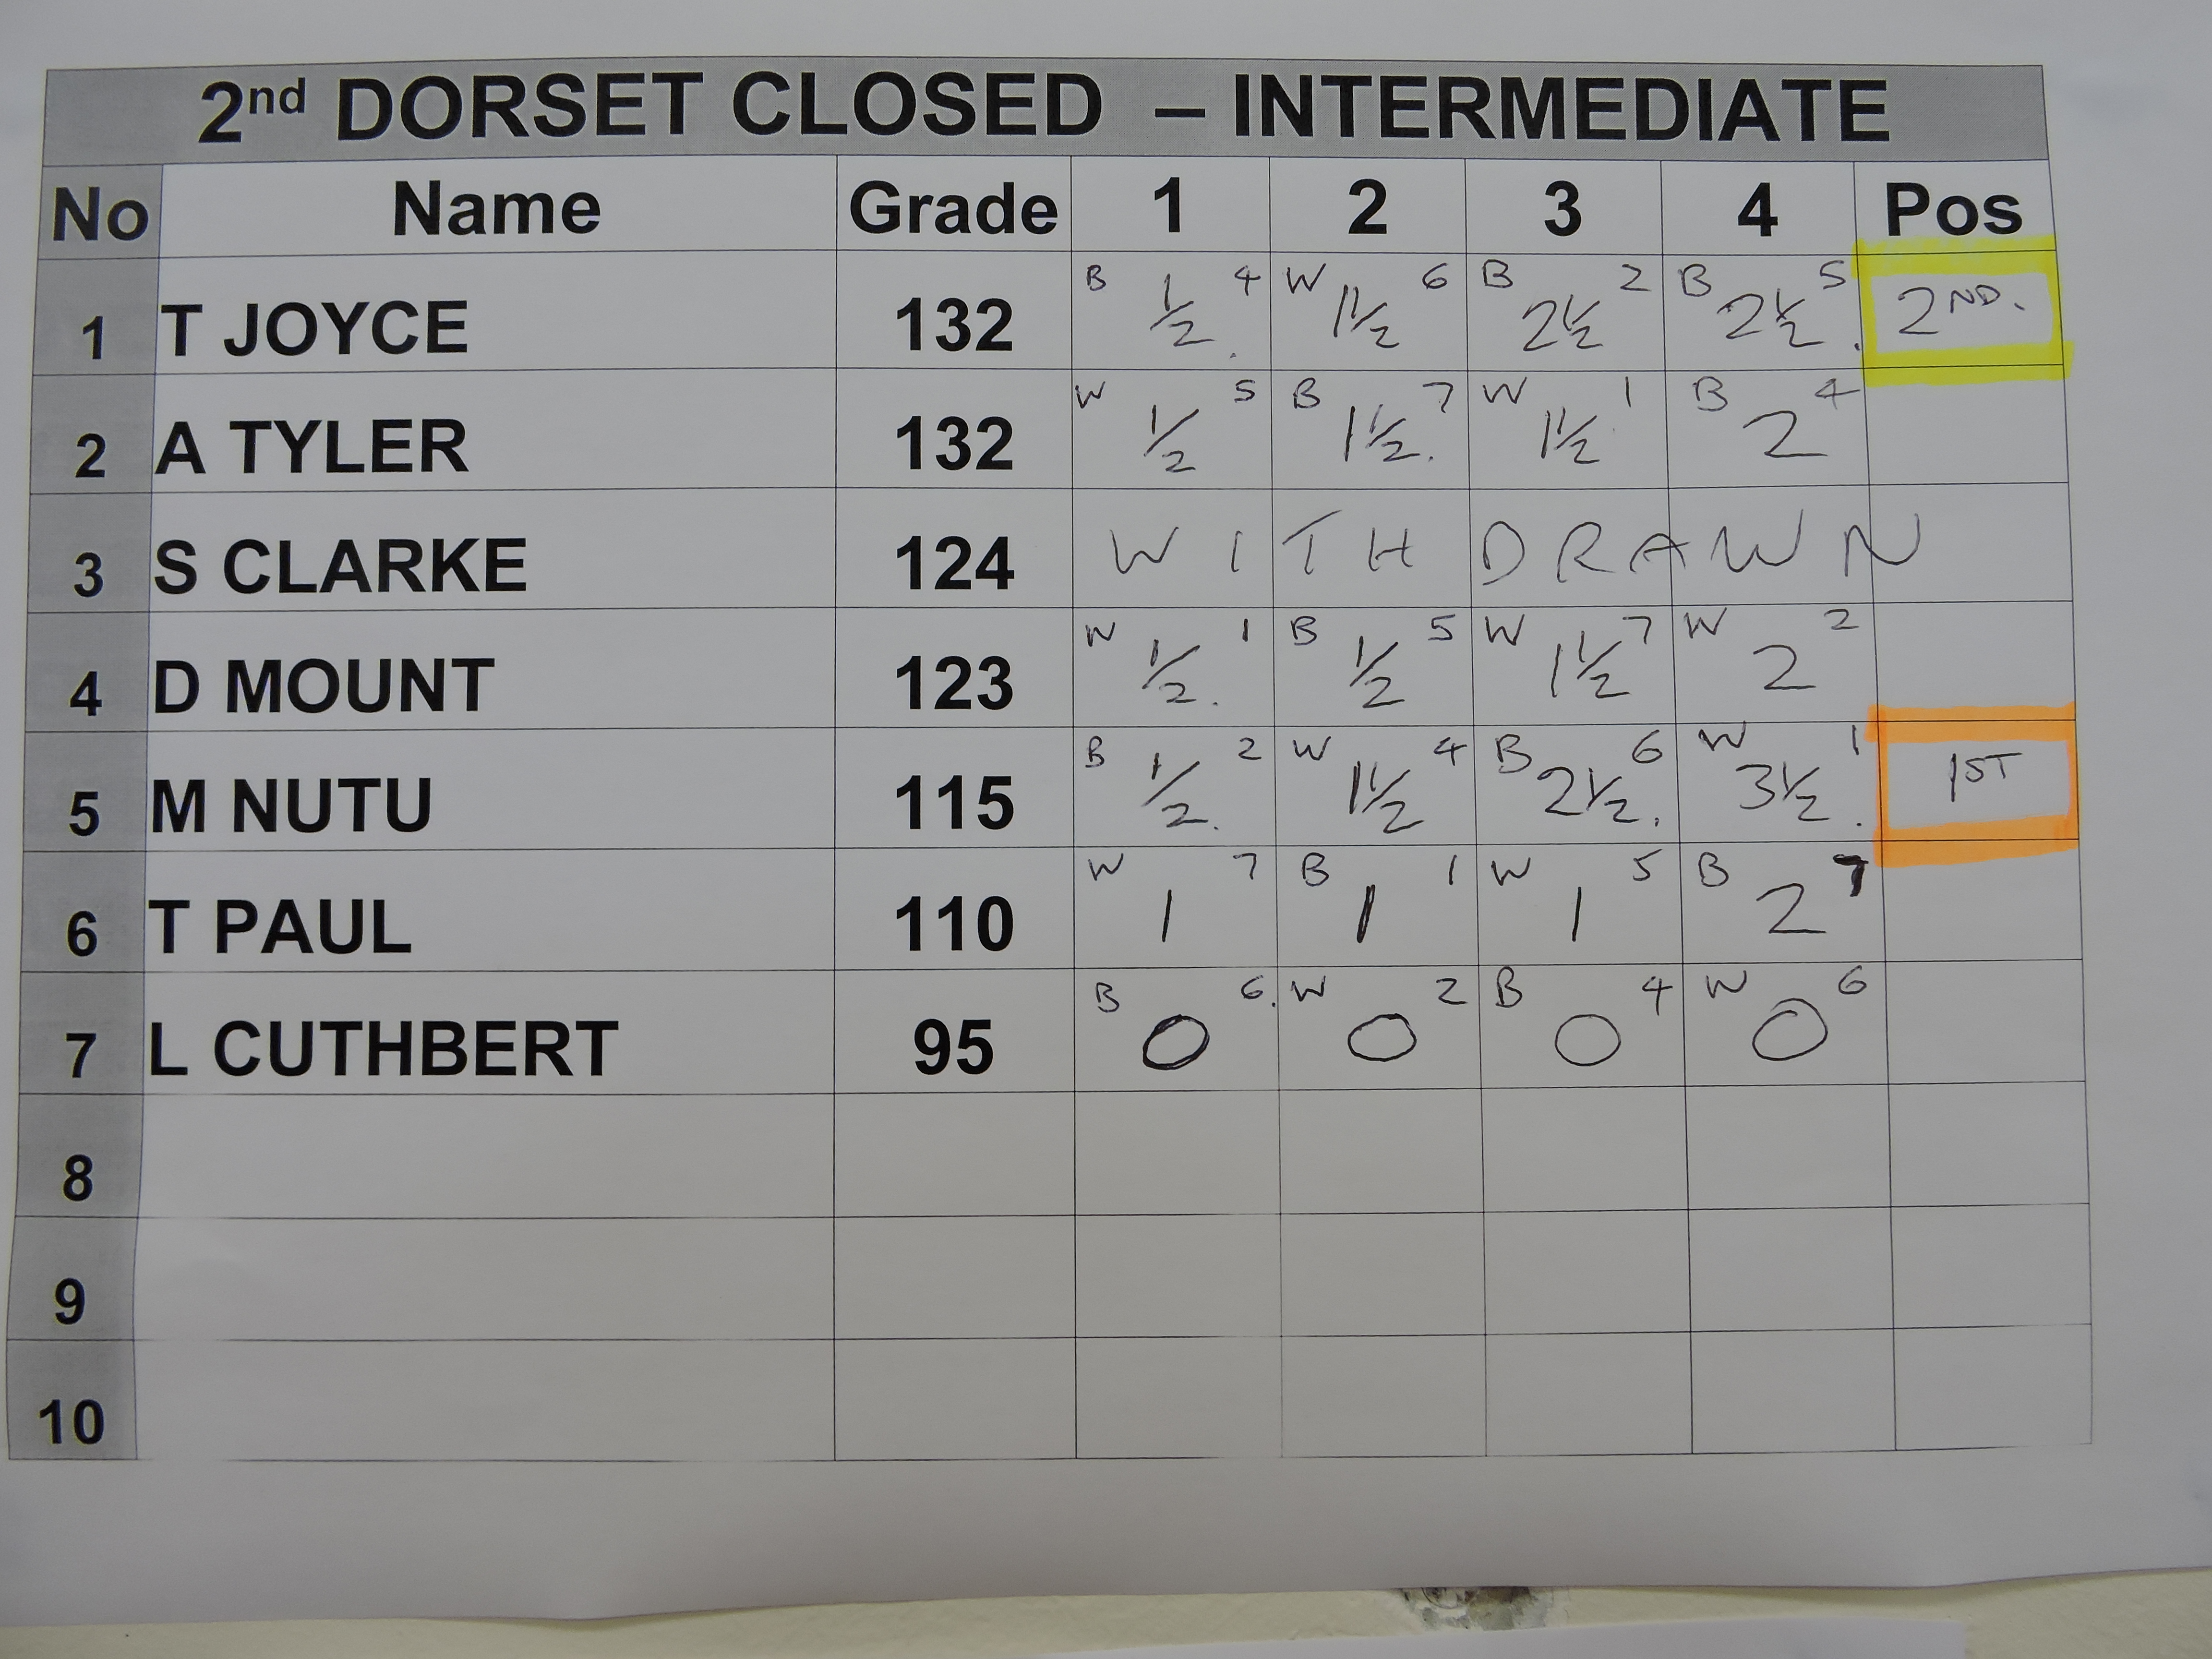 Dorset Chess Intermediate